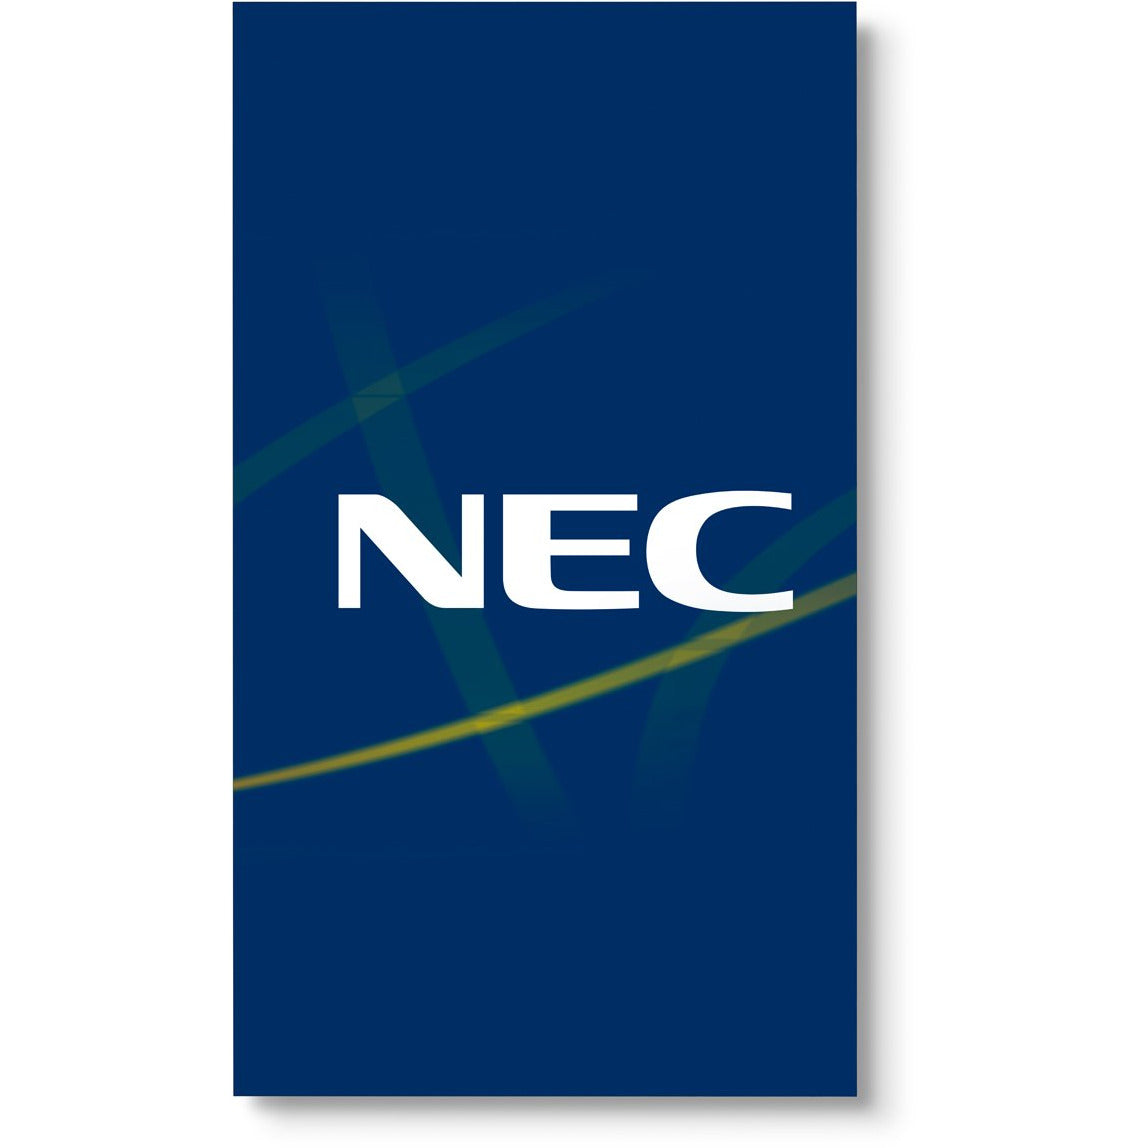 NEC MultiSync® UN552S LCD 55" Video Wall Display